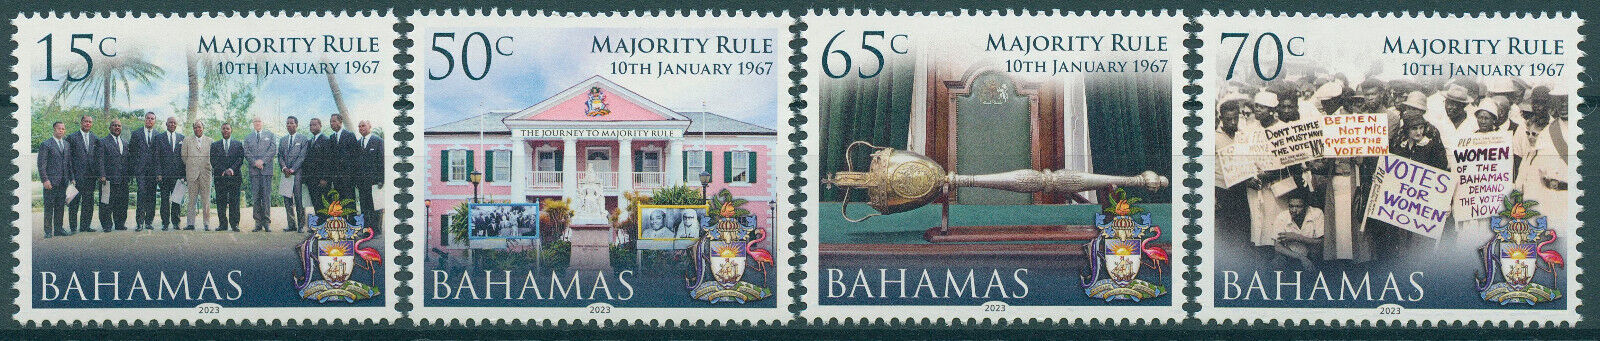 Bahamas 2022 MNH Historical Events Stamps Majority Rule 10th Jan 1967 4v Set